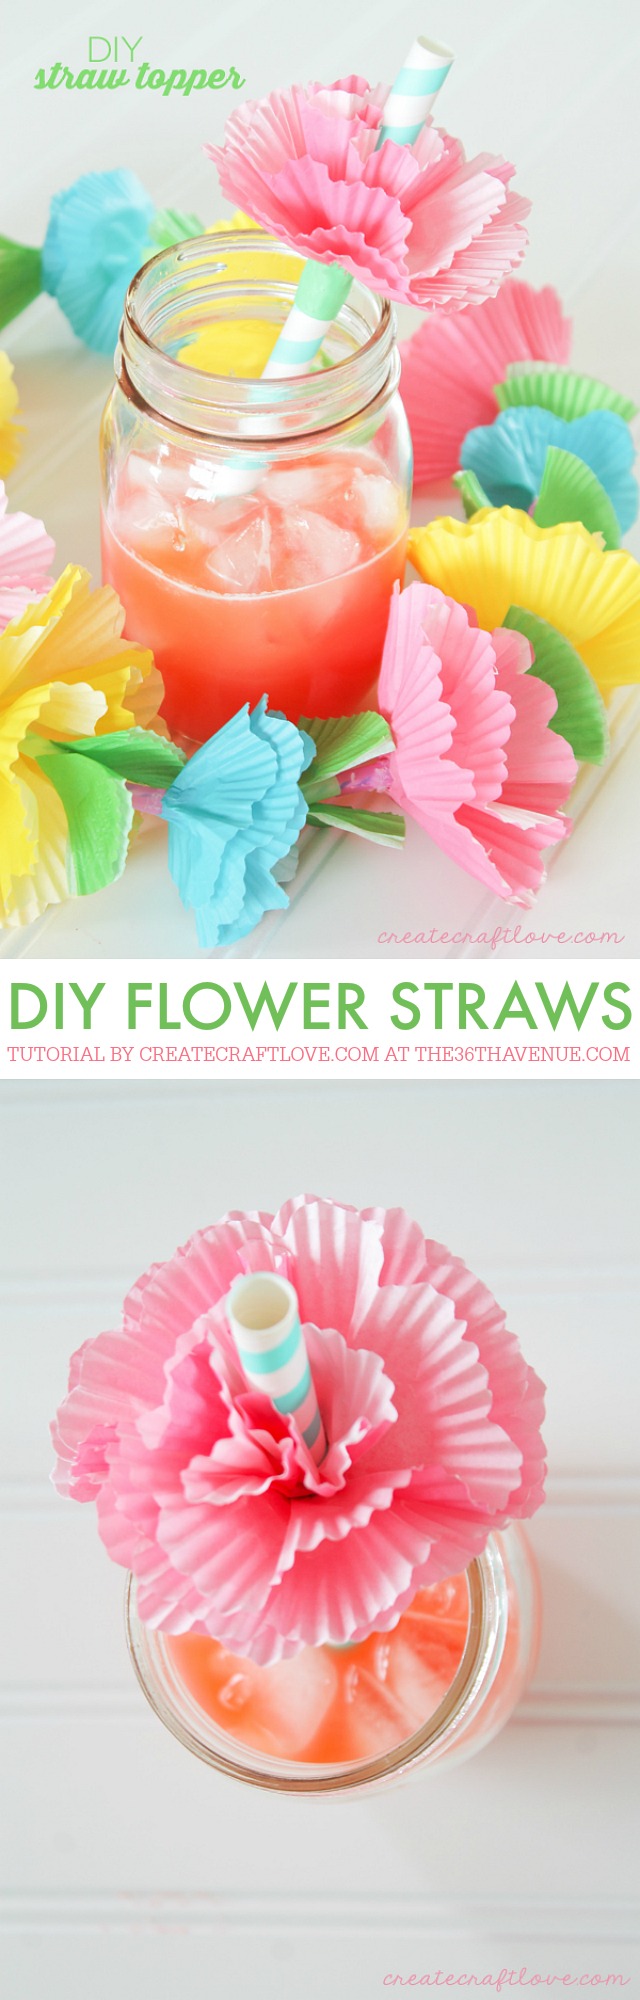 crafts-diy-flower-straws